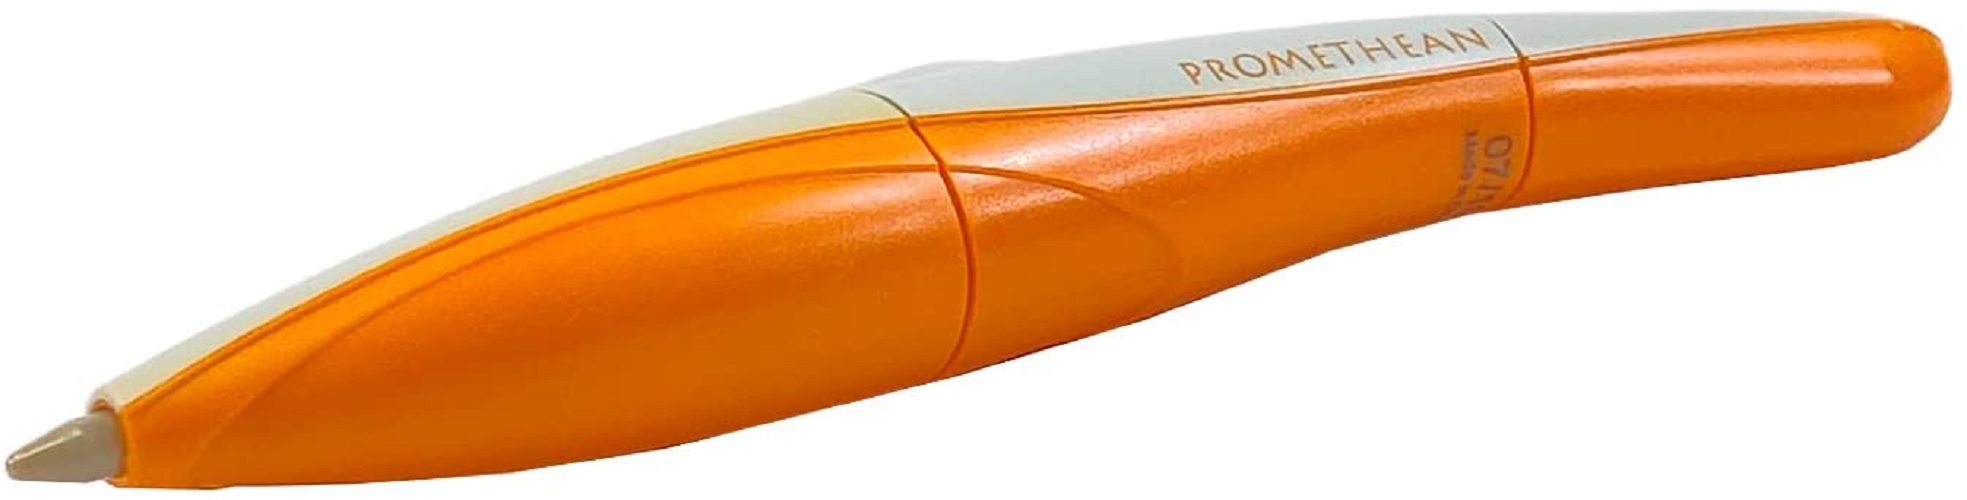 Promethean ARAAC2PENSET ActivArena Spare Pen Set Cordless Battery-free Pen for ActivBoard - image 3 of 5